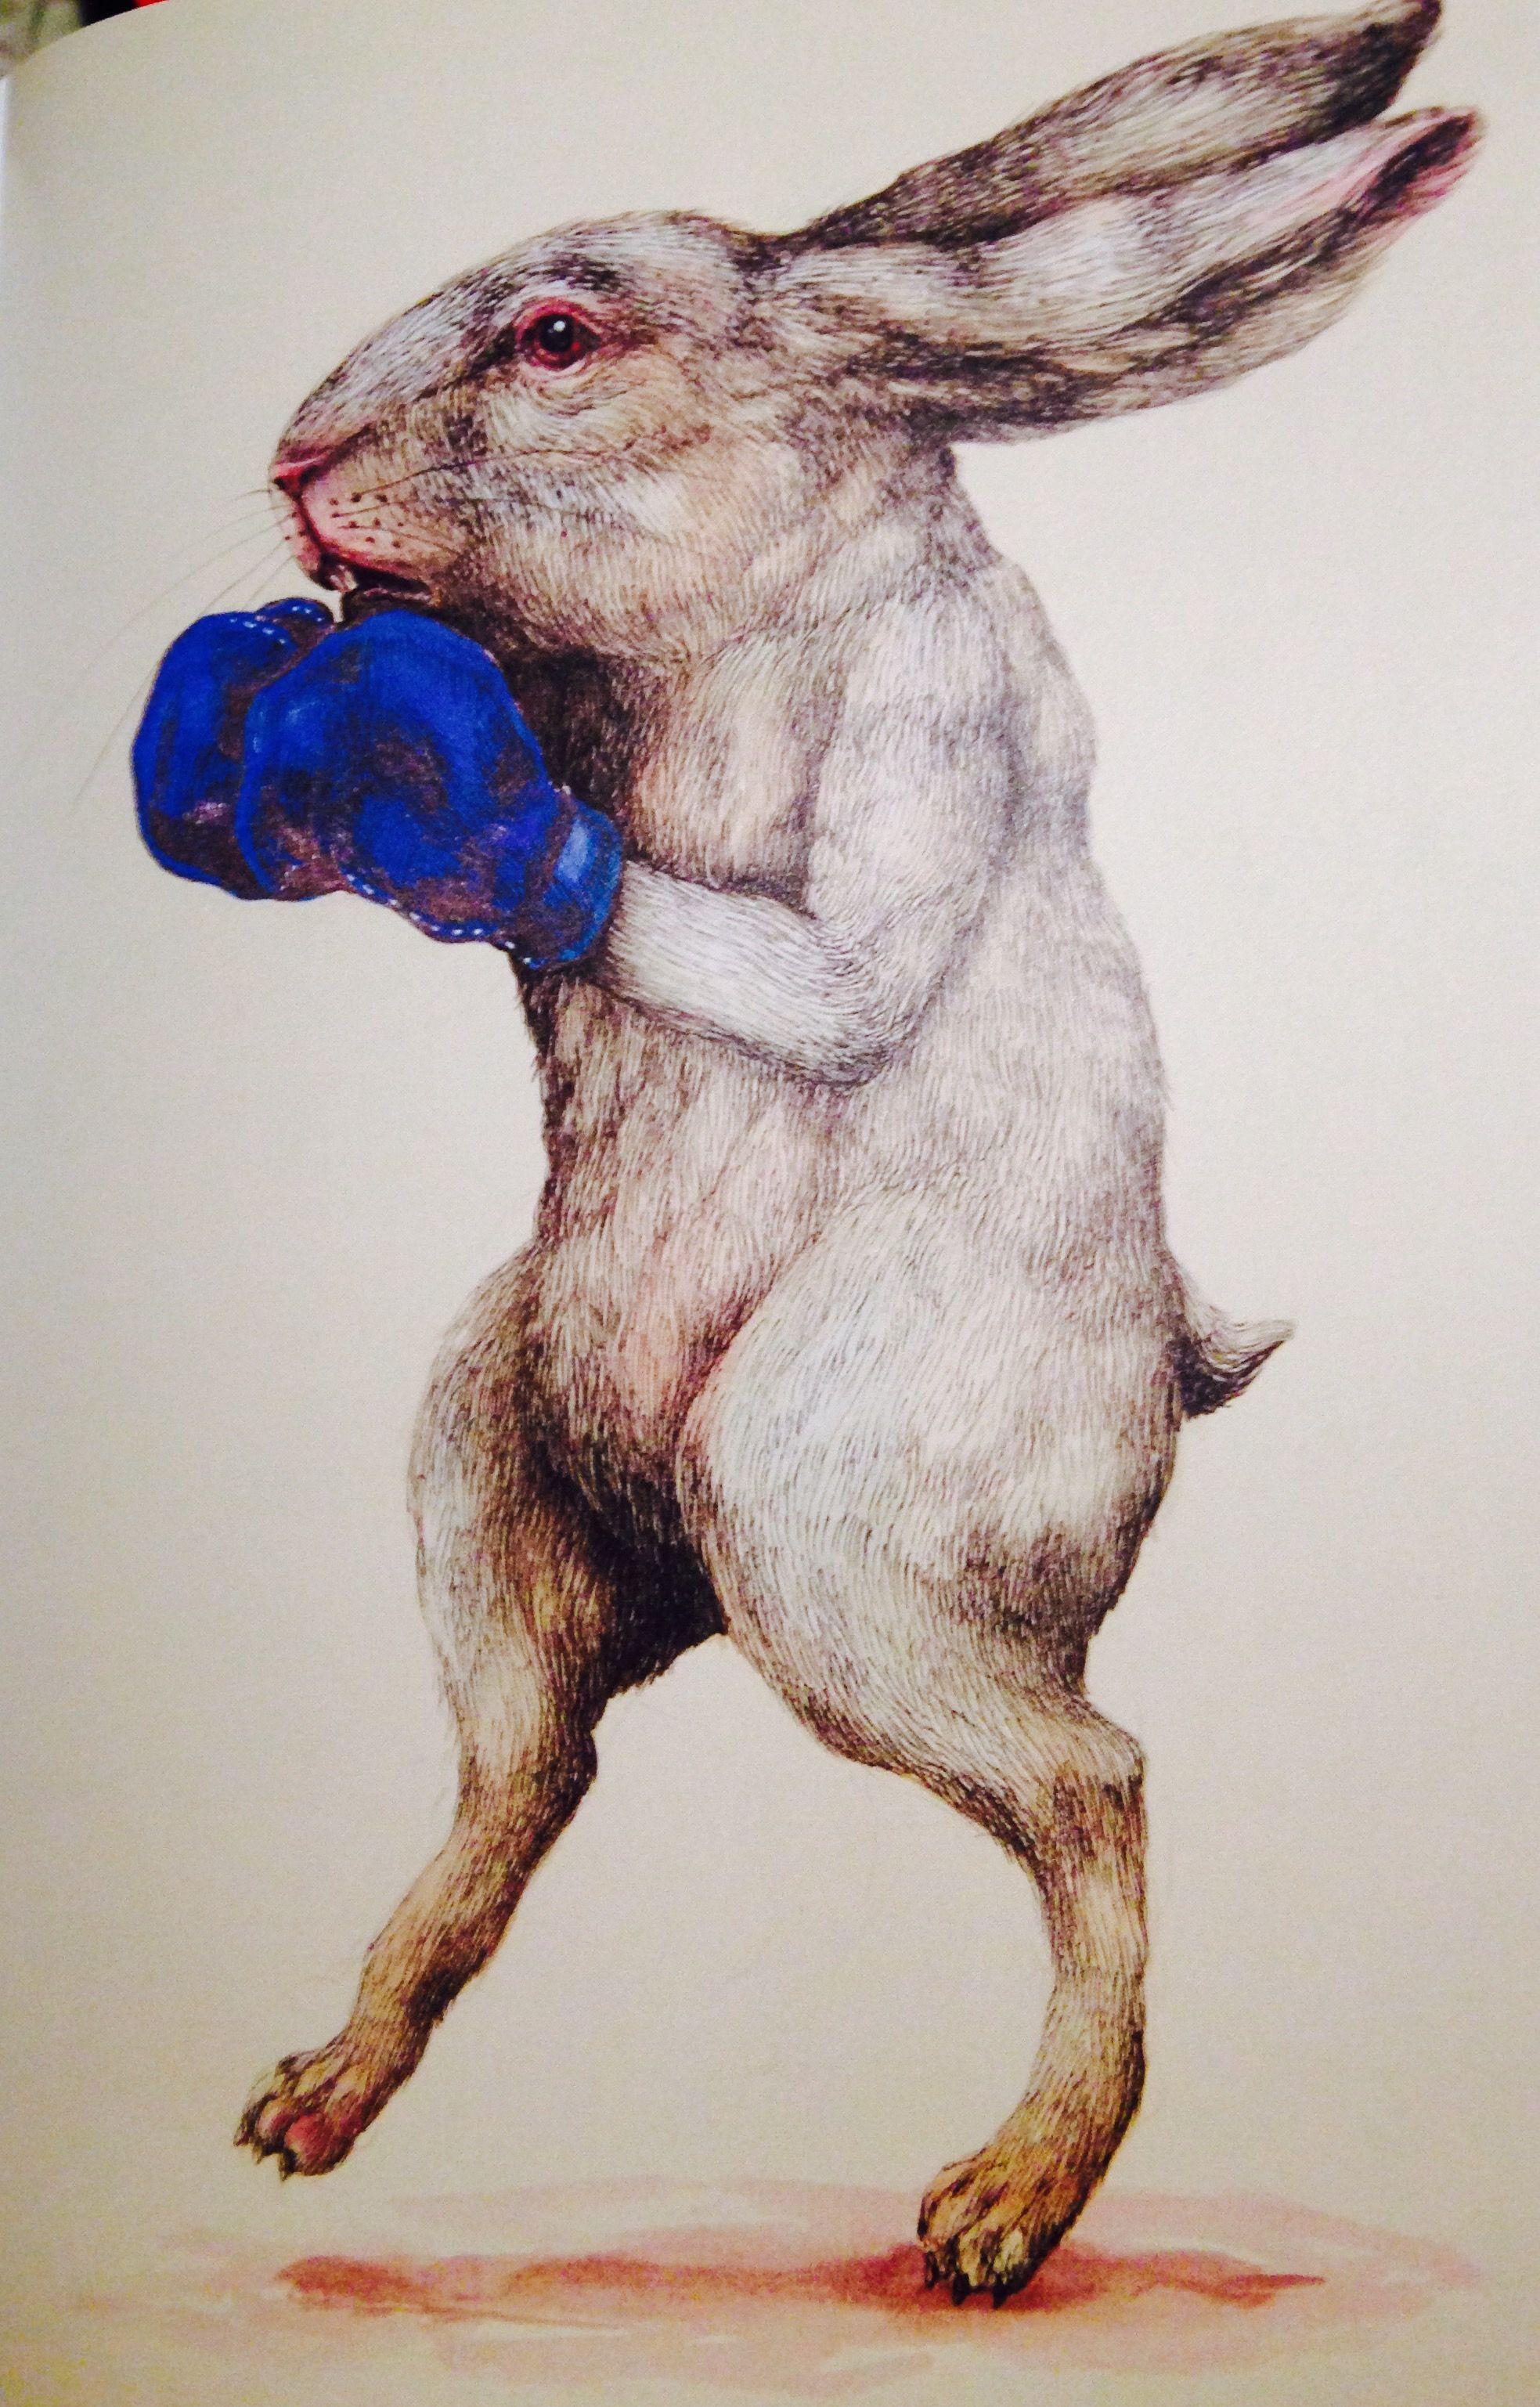 Rabbit Boxing Logo - Rabbit with Boxing Gloves. Illustration by Ericailcane. Rabbits